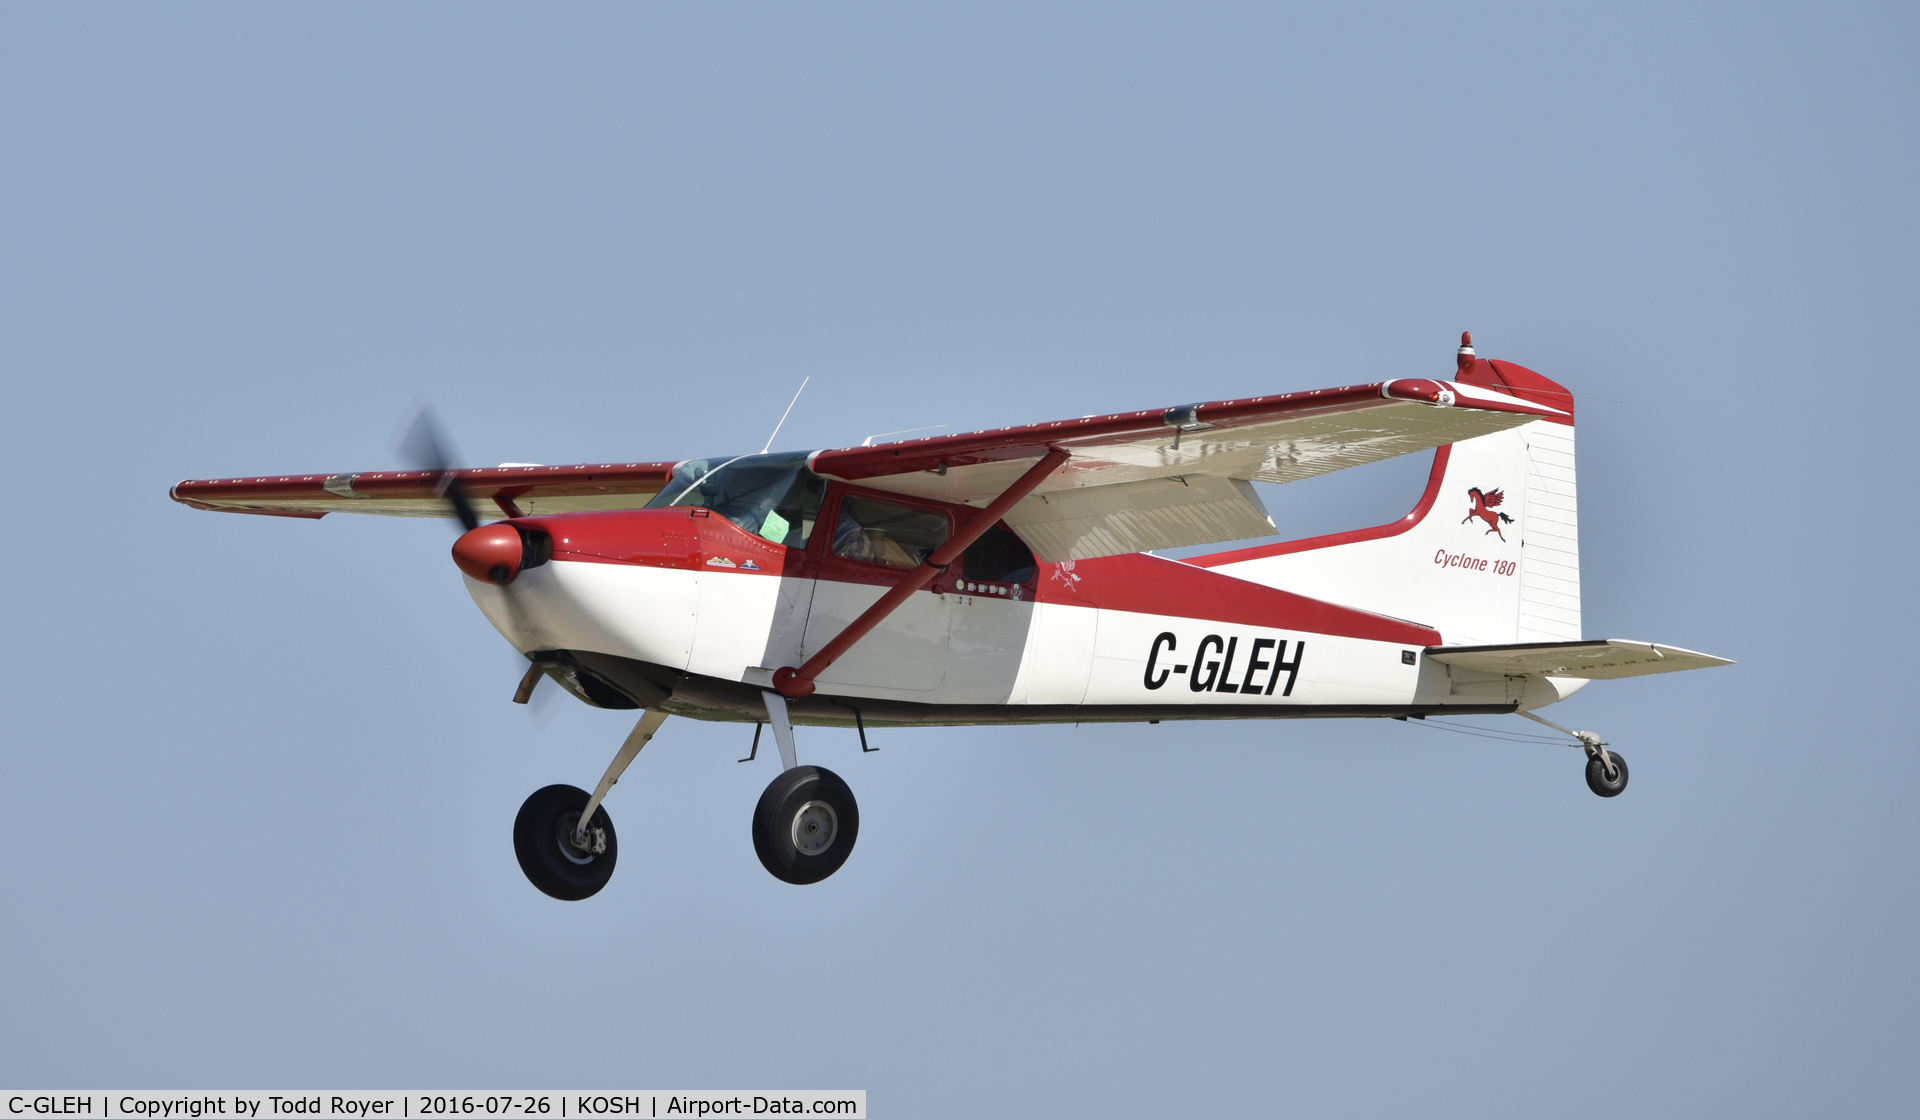 C-GLEH, 2004 St-Just Cyclone 180 C/N 0023, Airventure 2016